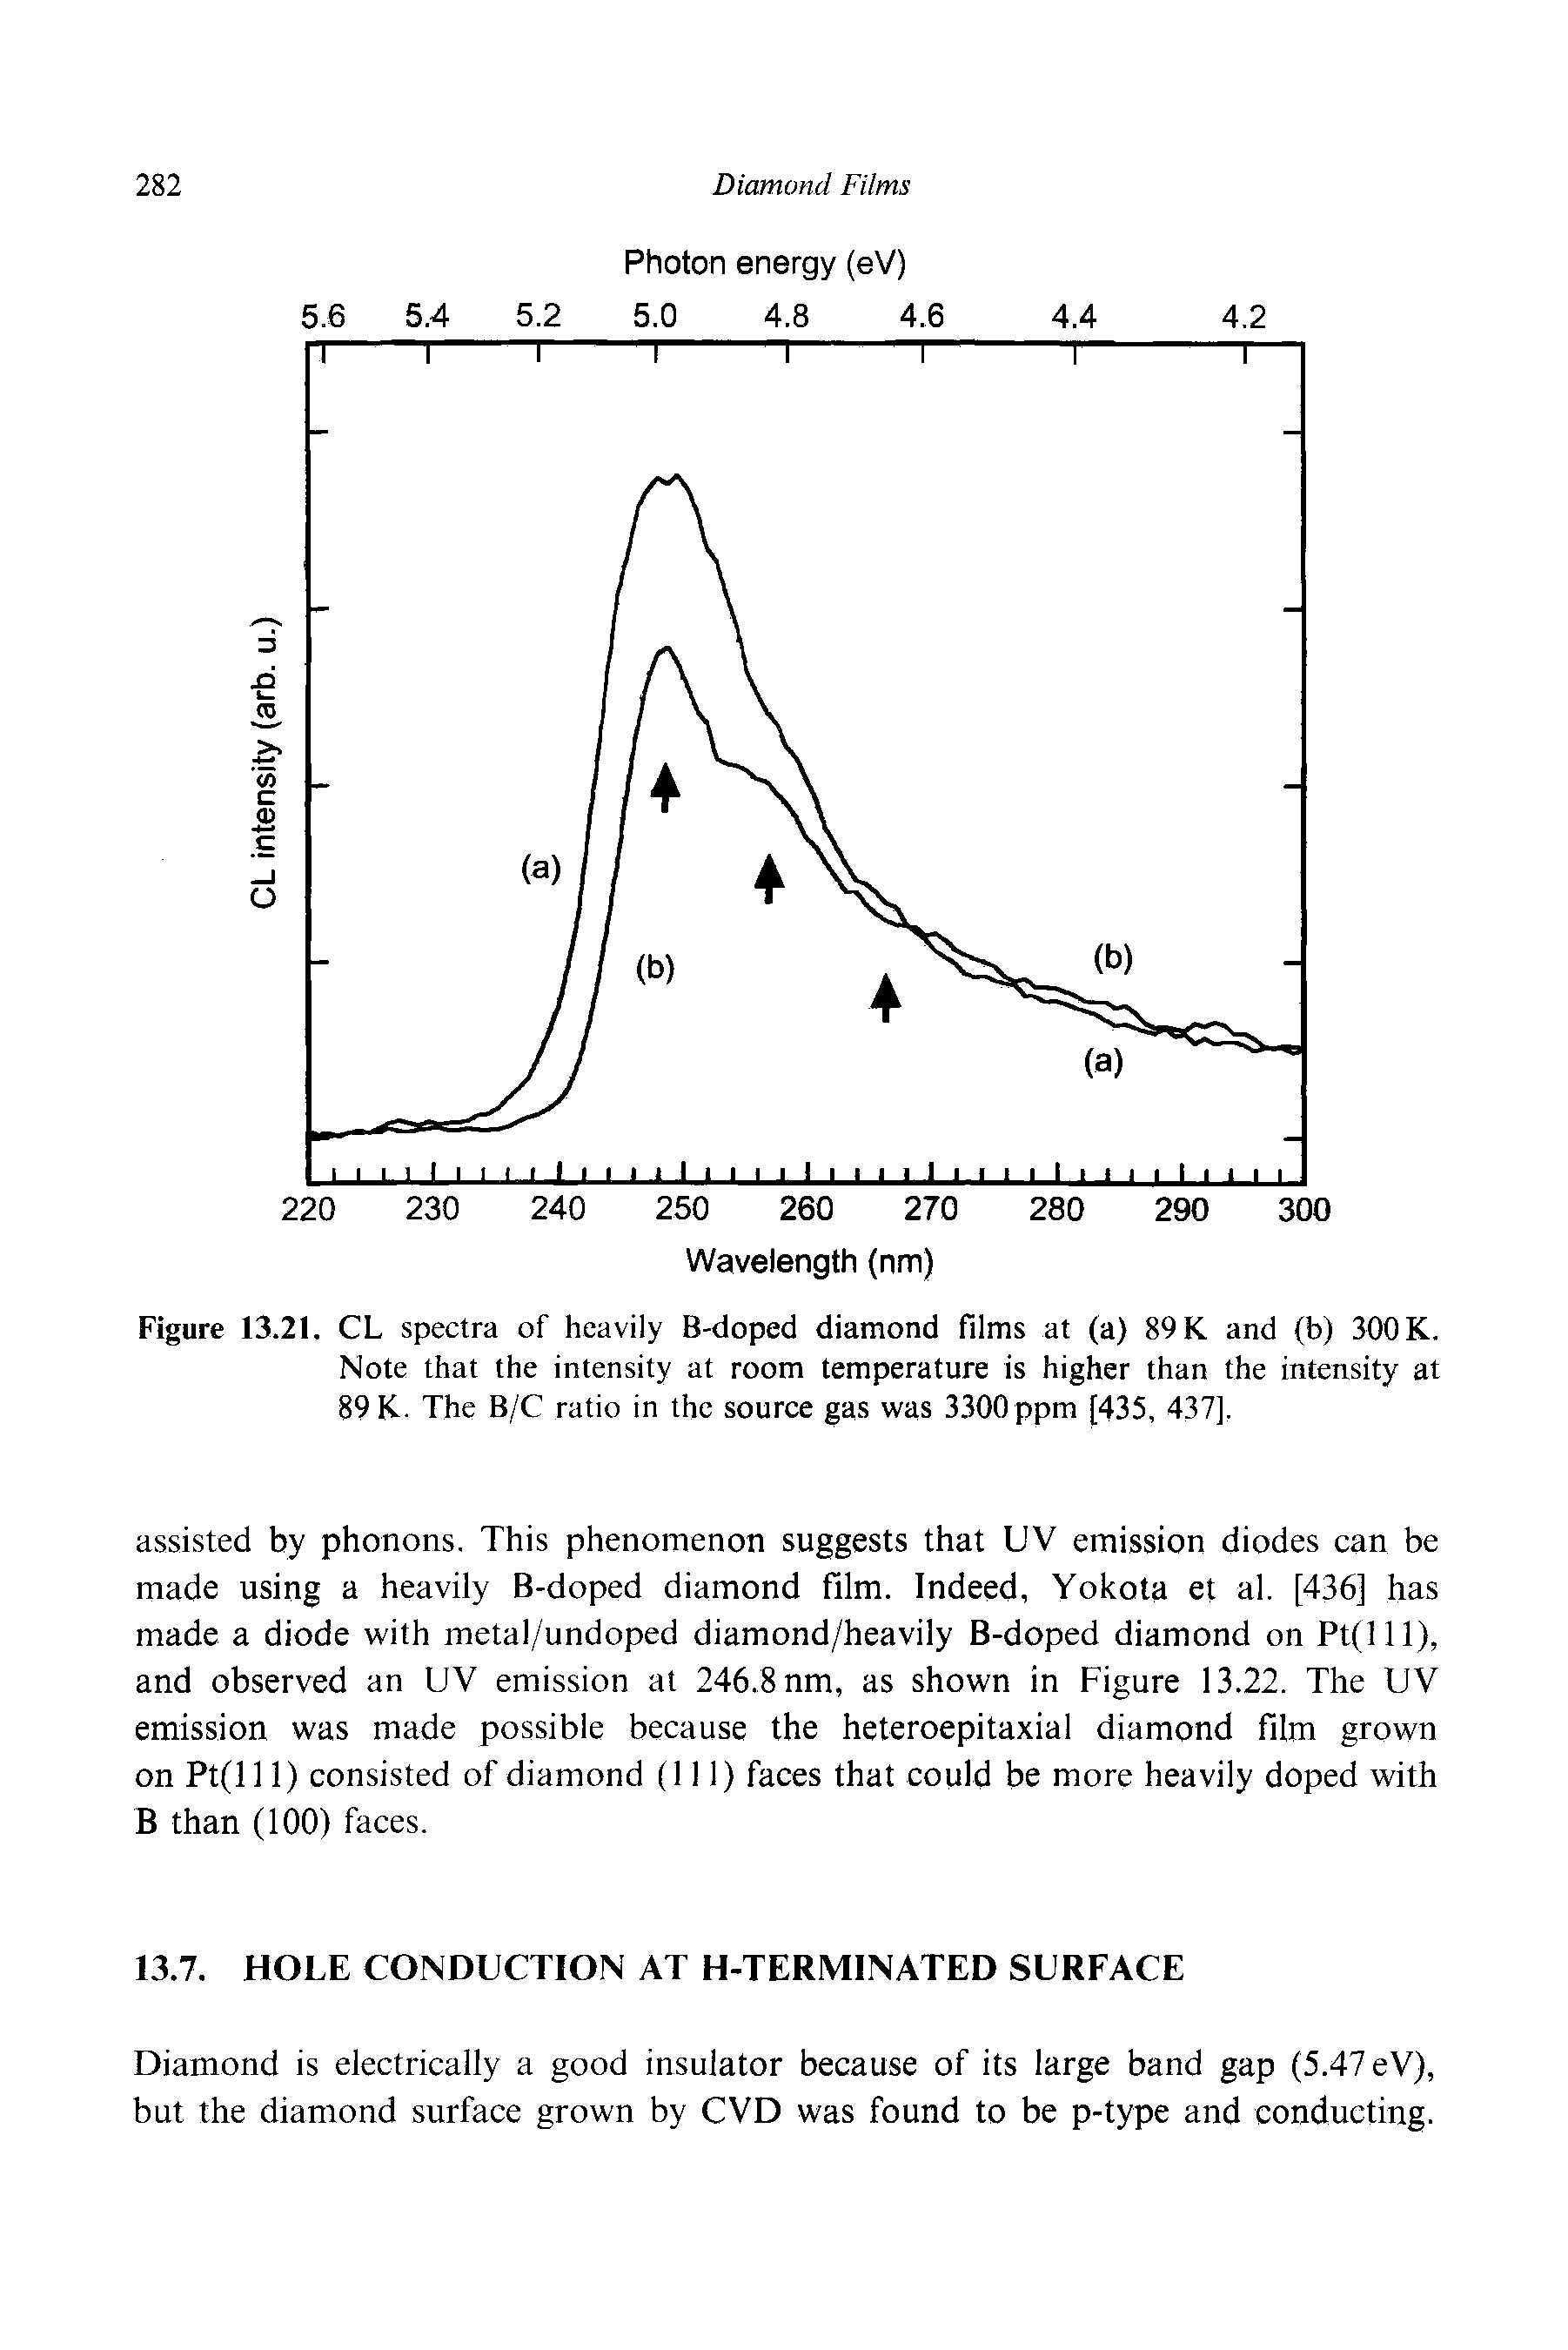 Figure 13.21. CL spectra of heavily B-doped diamond films at (a) 89 K and (b) 300 K.